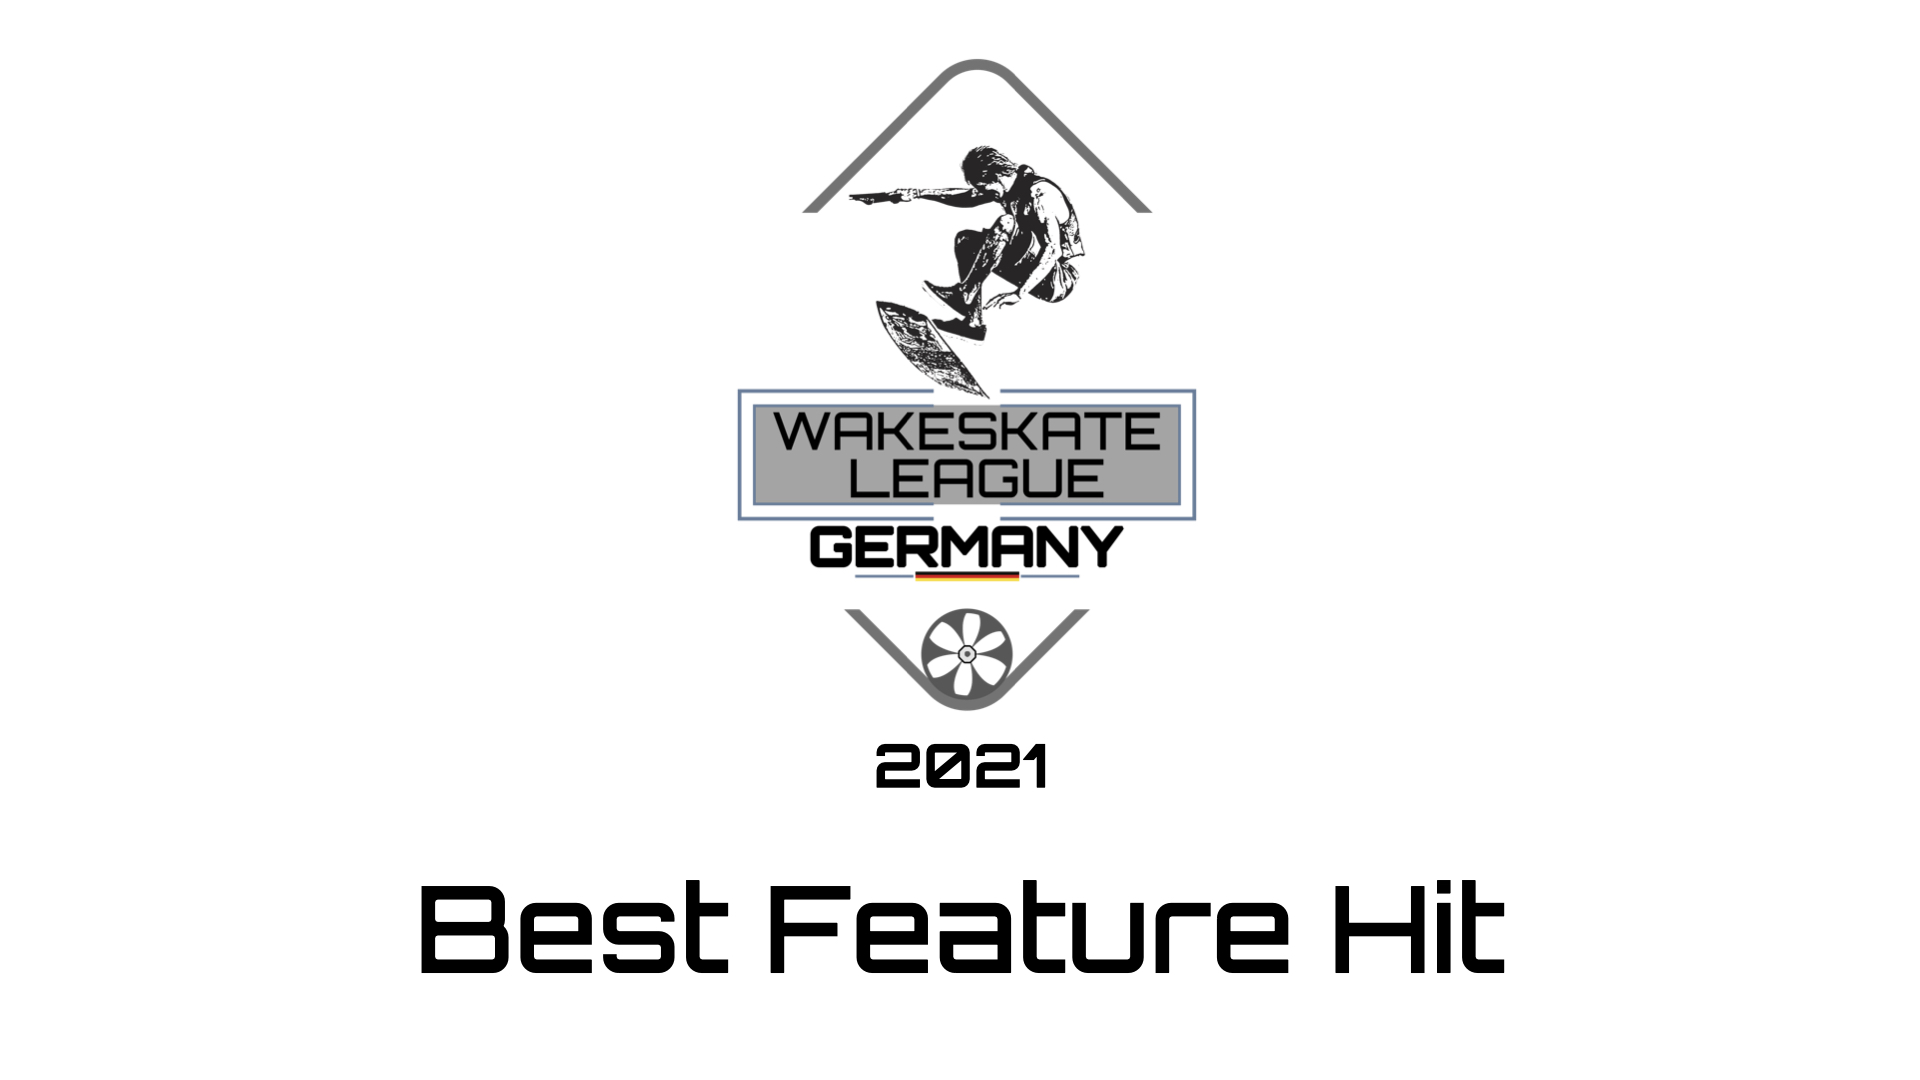 Wakeskate League Germany 2021 - #6 Best Feature Hit